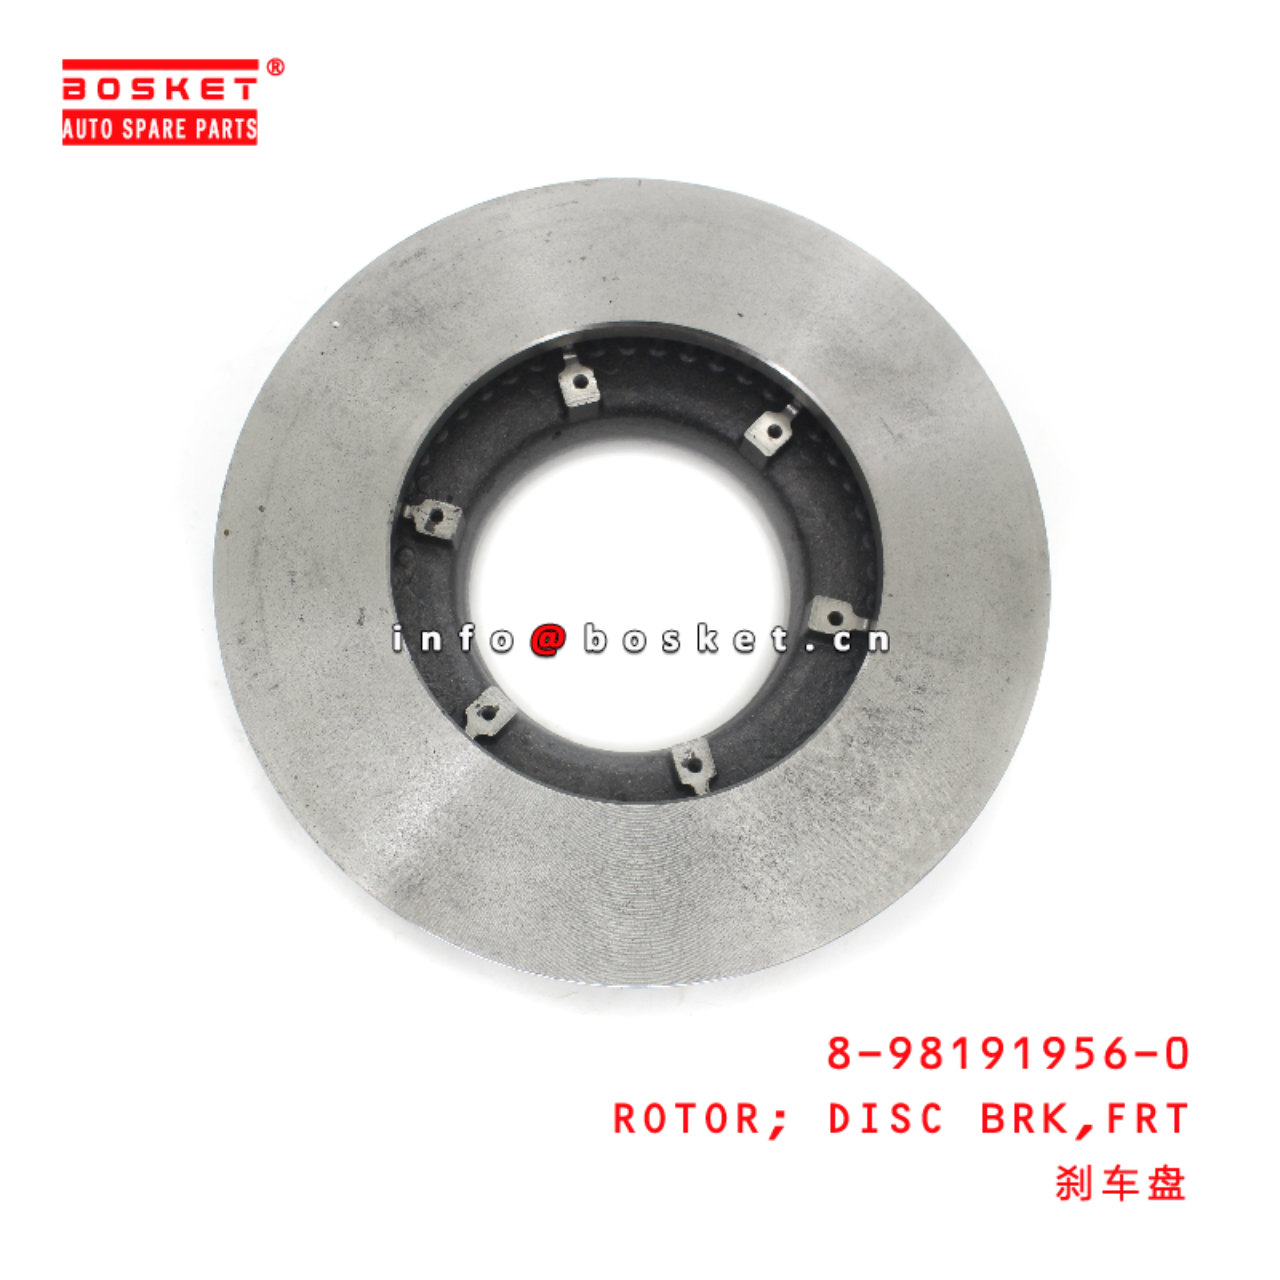 8-98191956-0 Disc Brake Rotor suitable for ISUZU   8981919560